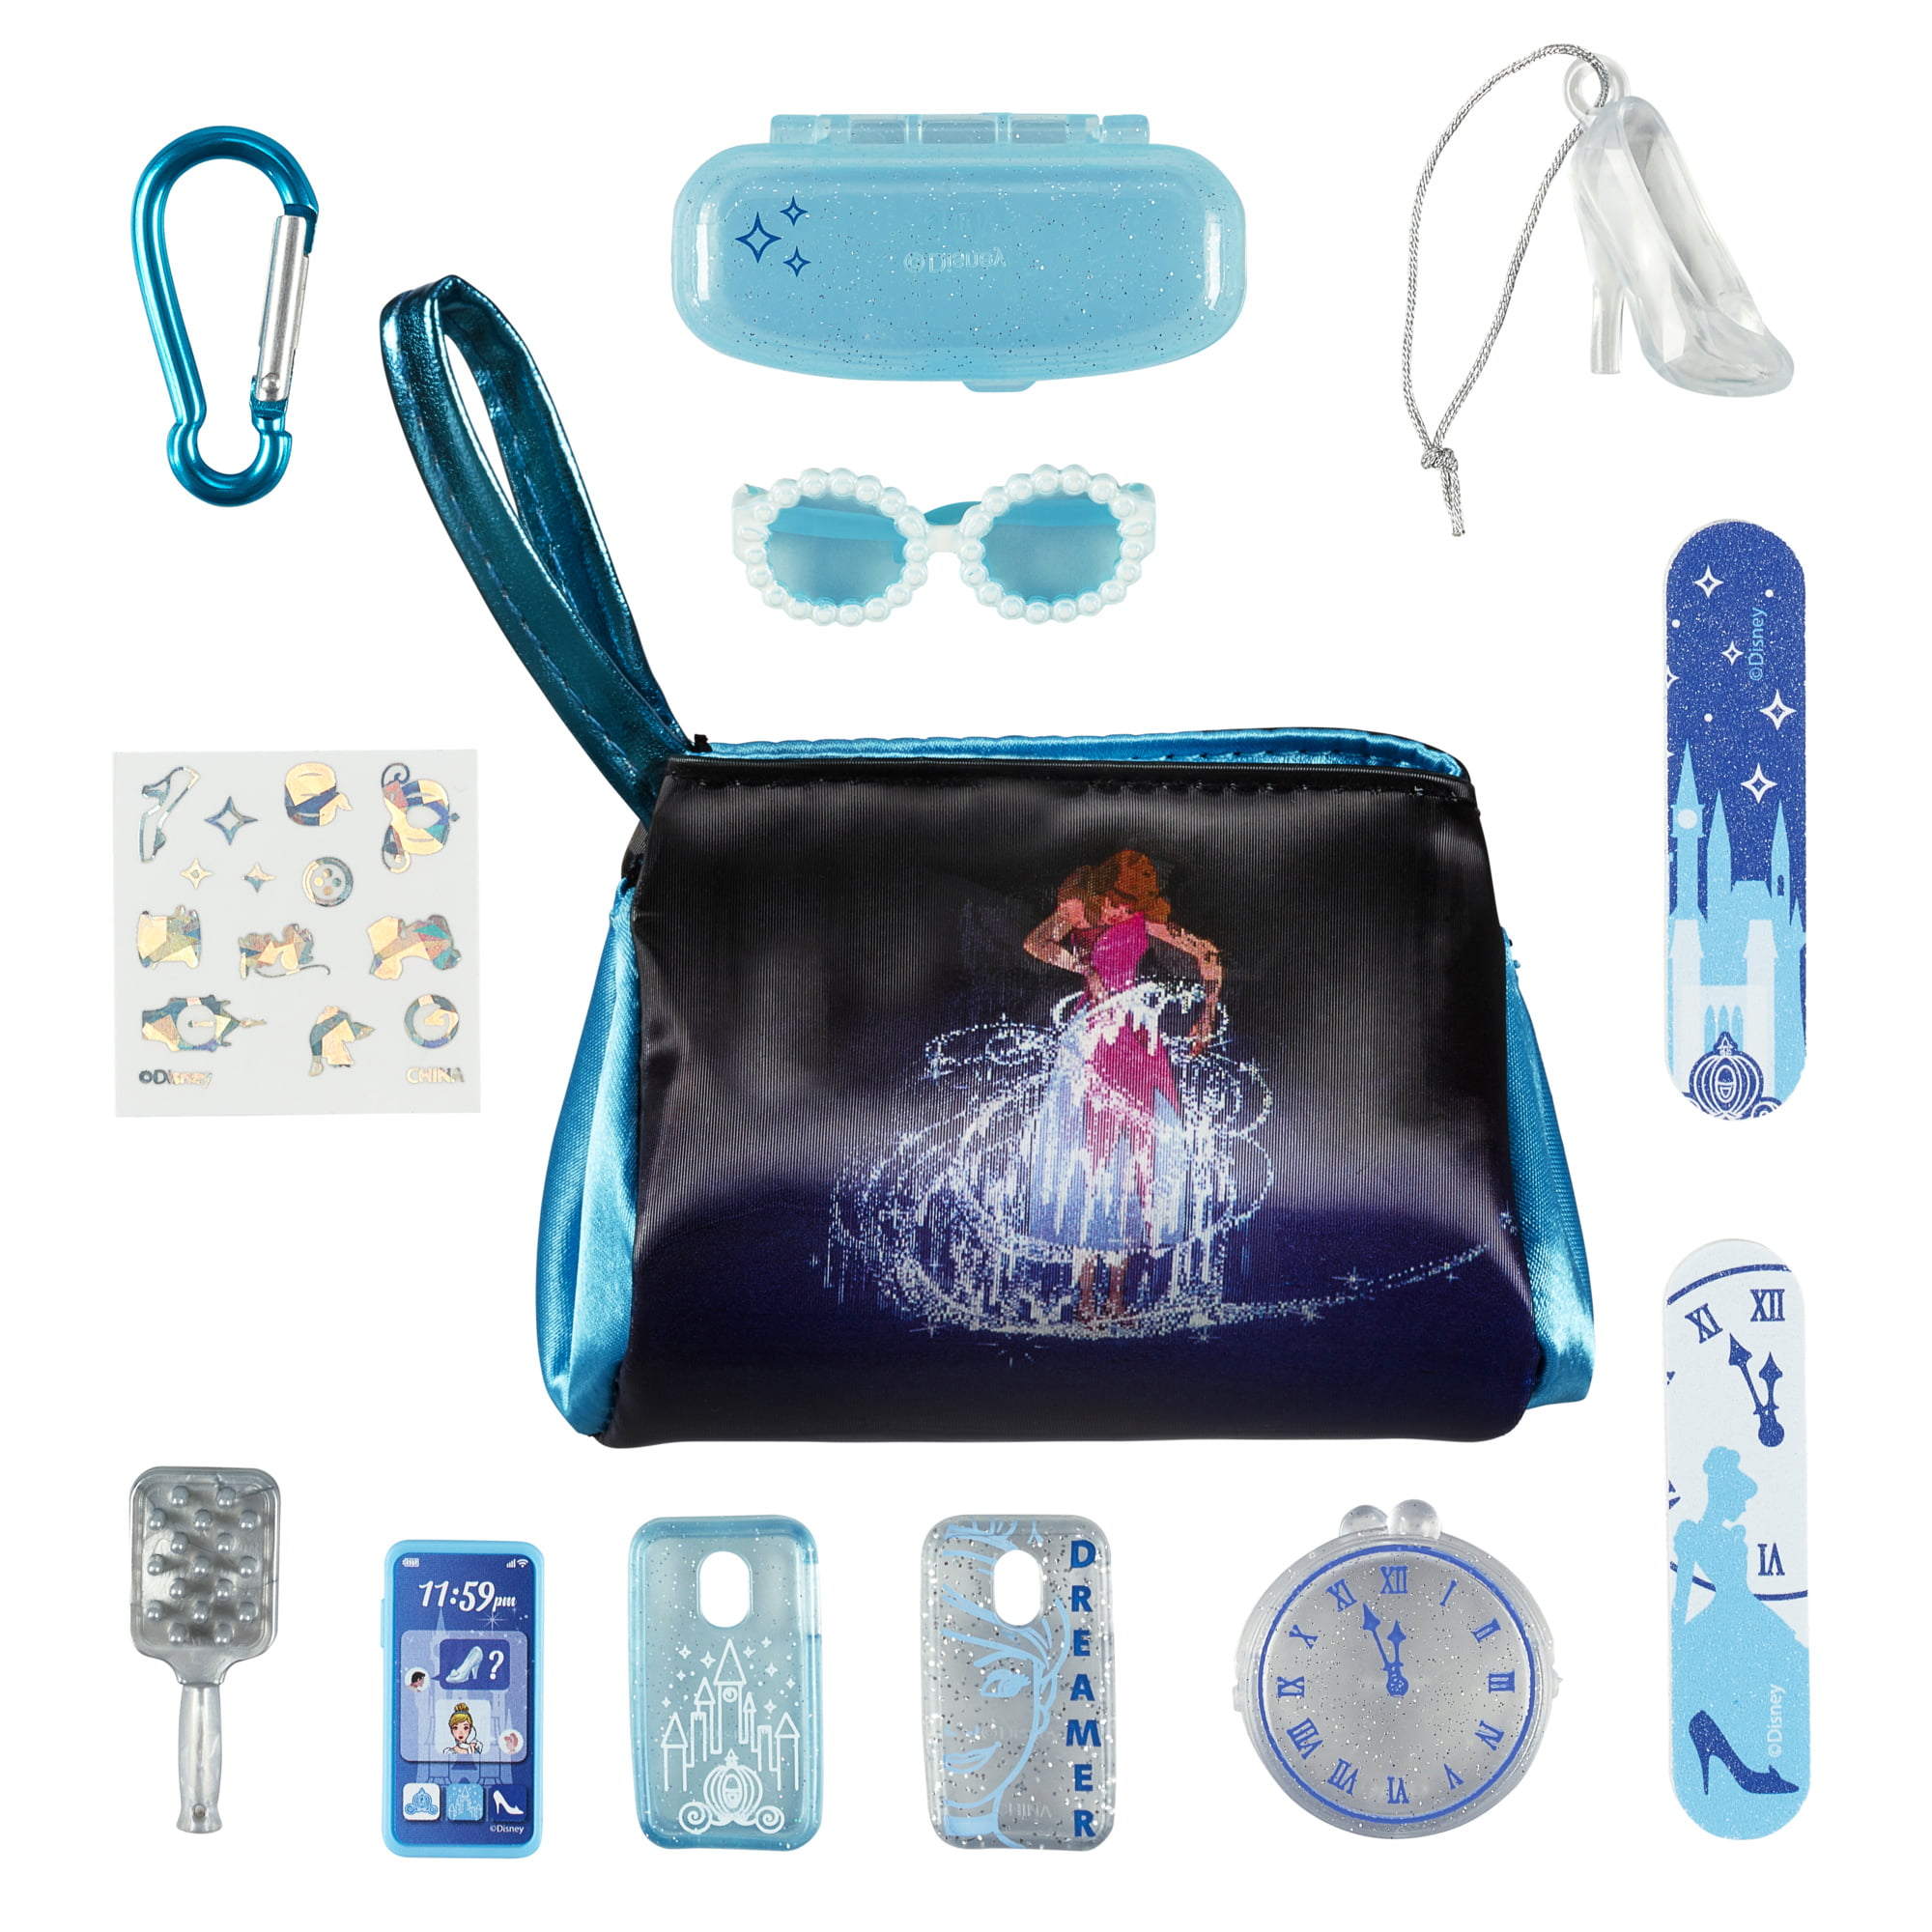 Disney, Toys, Disney Real Littles Lilo Stitch Handbags